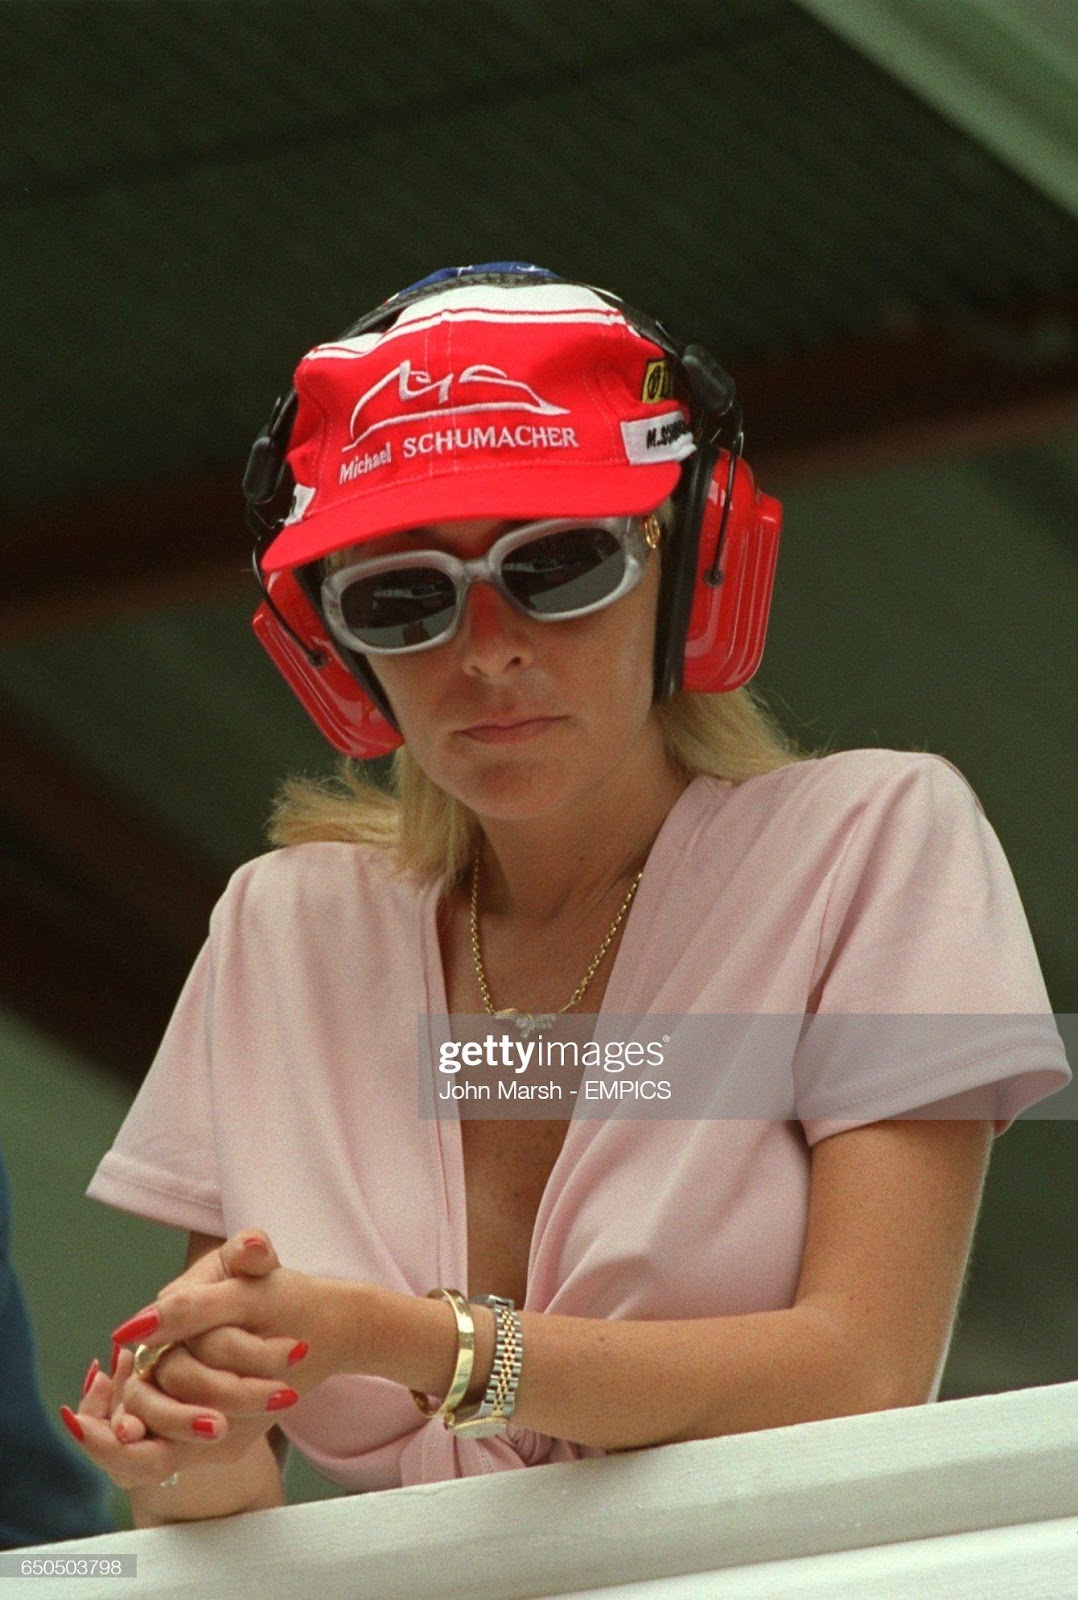 A Michael Schumacher female fan at the Monaco Grand Prix on May 23, 1998.